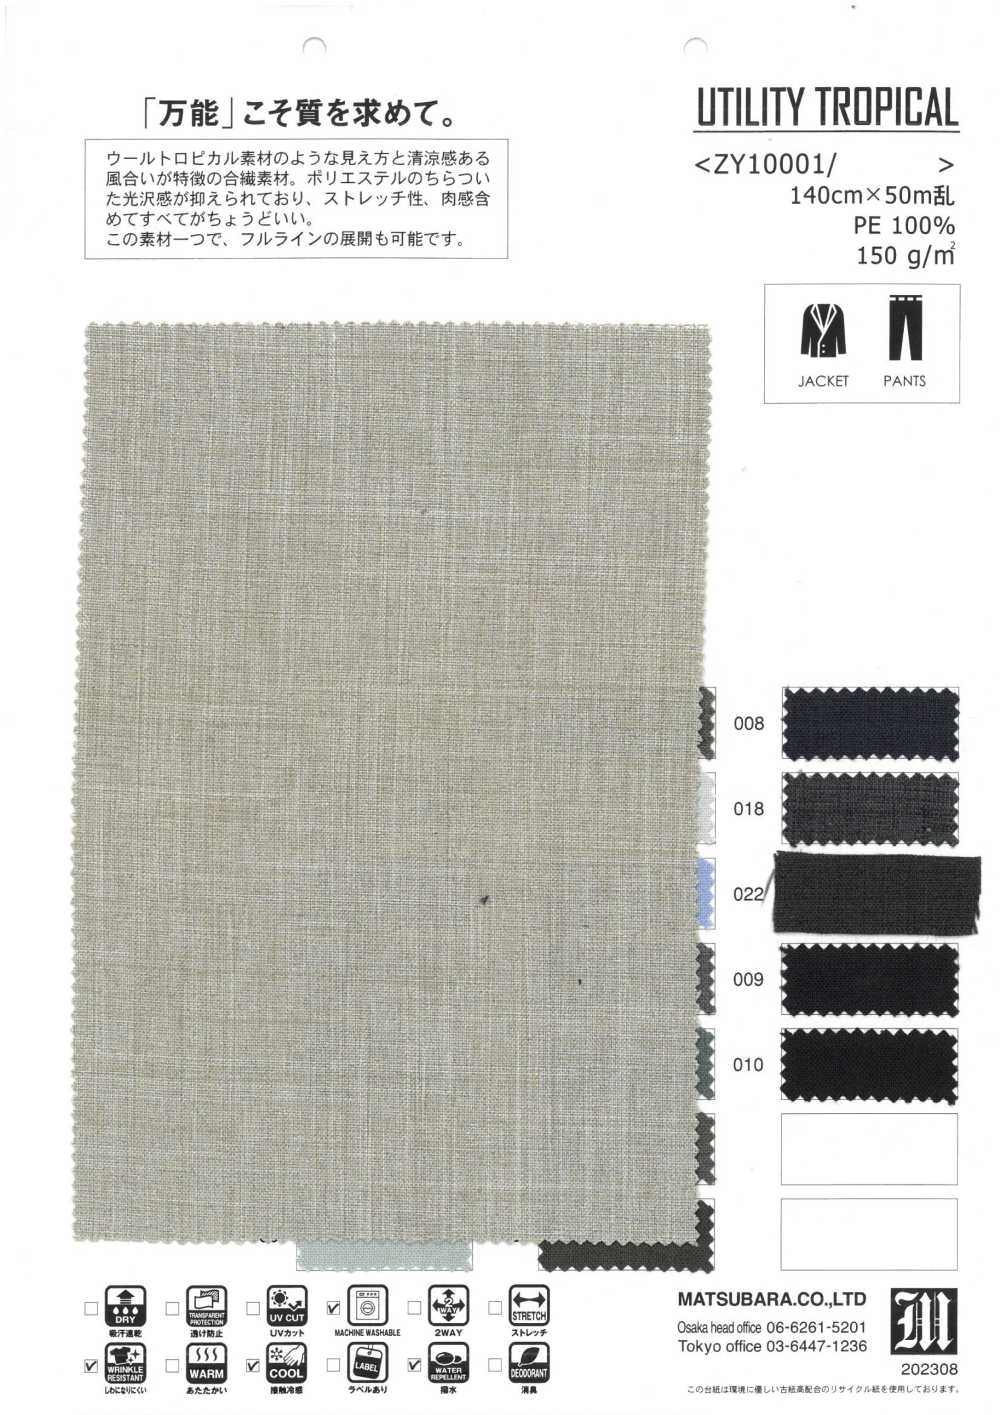 ZY10001 UTILIDAD TROPICAL[Fabrica Textil] Matsubara